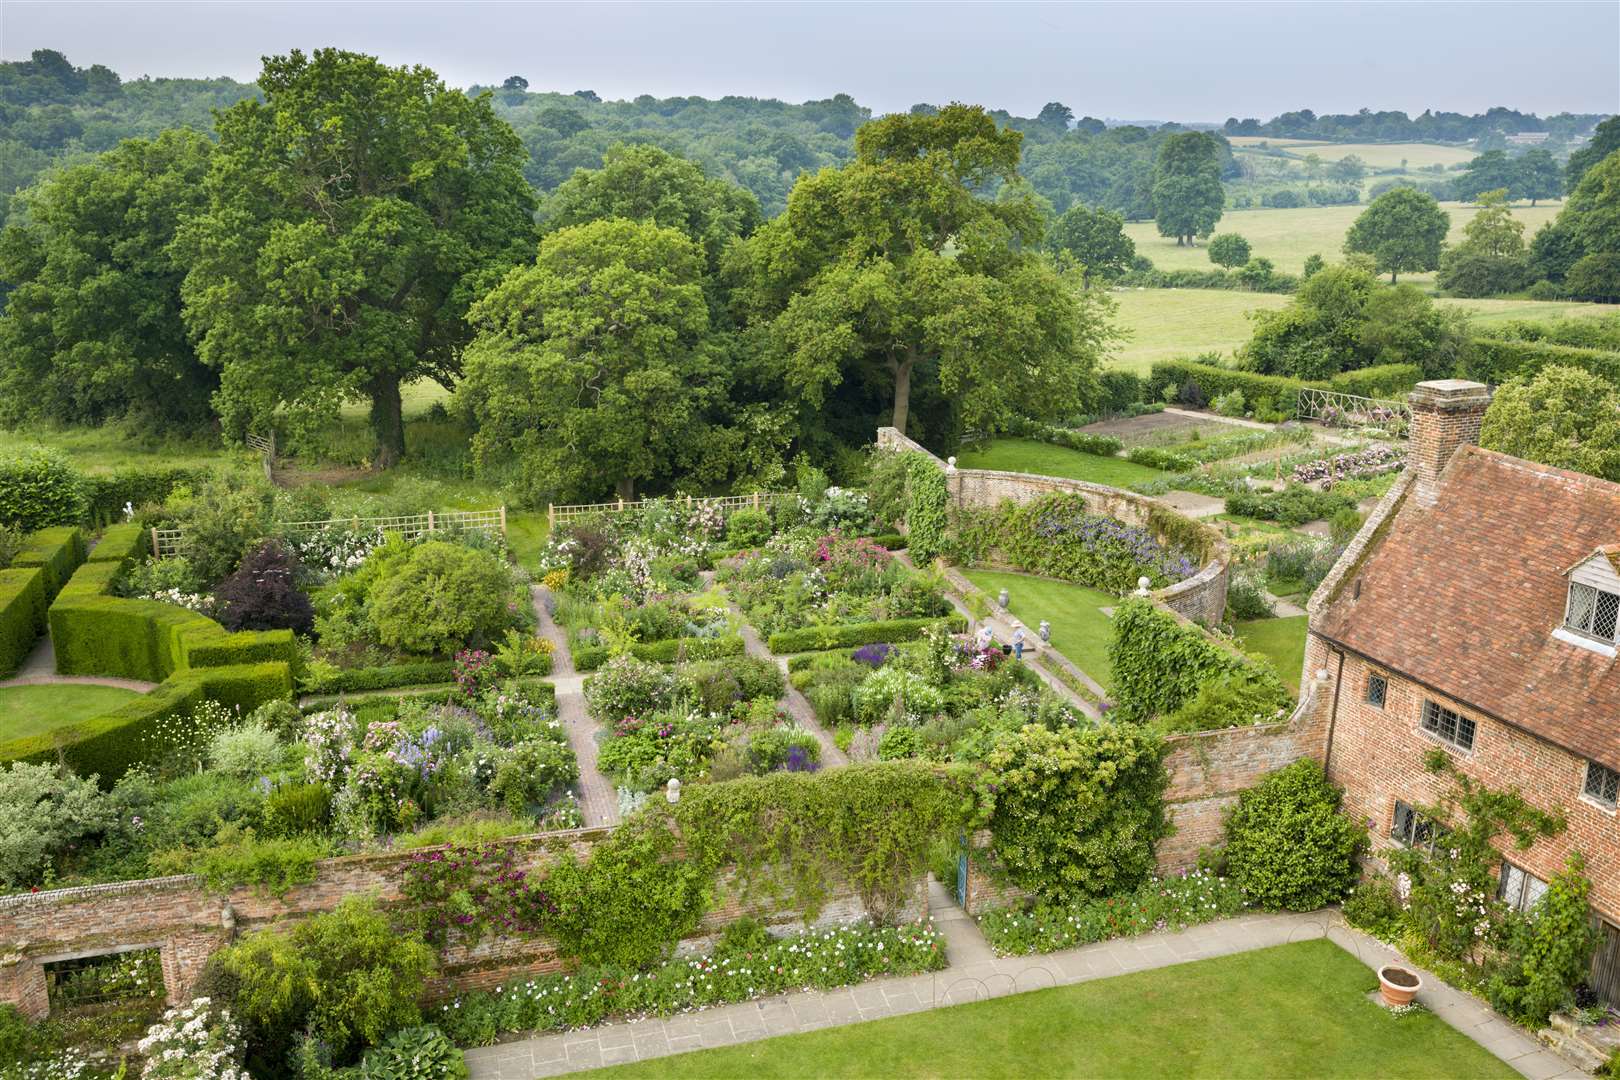 The Rose Garden from the Tower at Sissinghurst Castle Garden Picture: National Trust Images/Andrew Butler